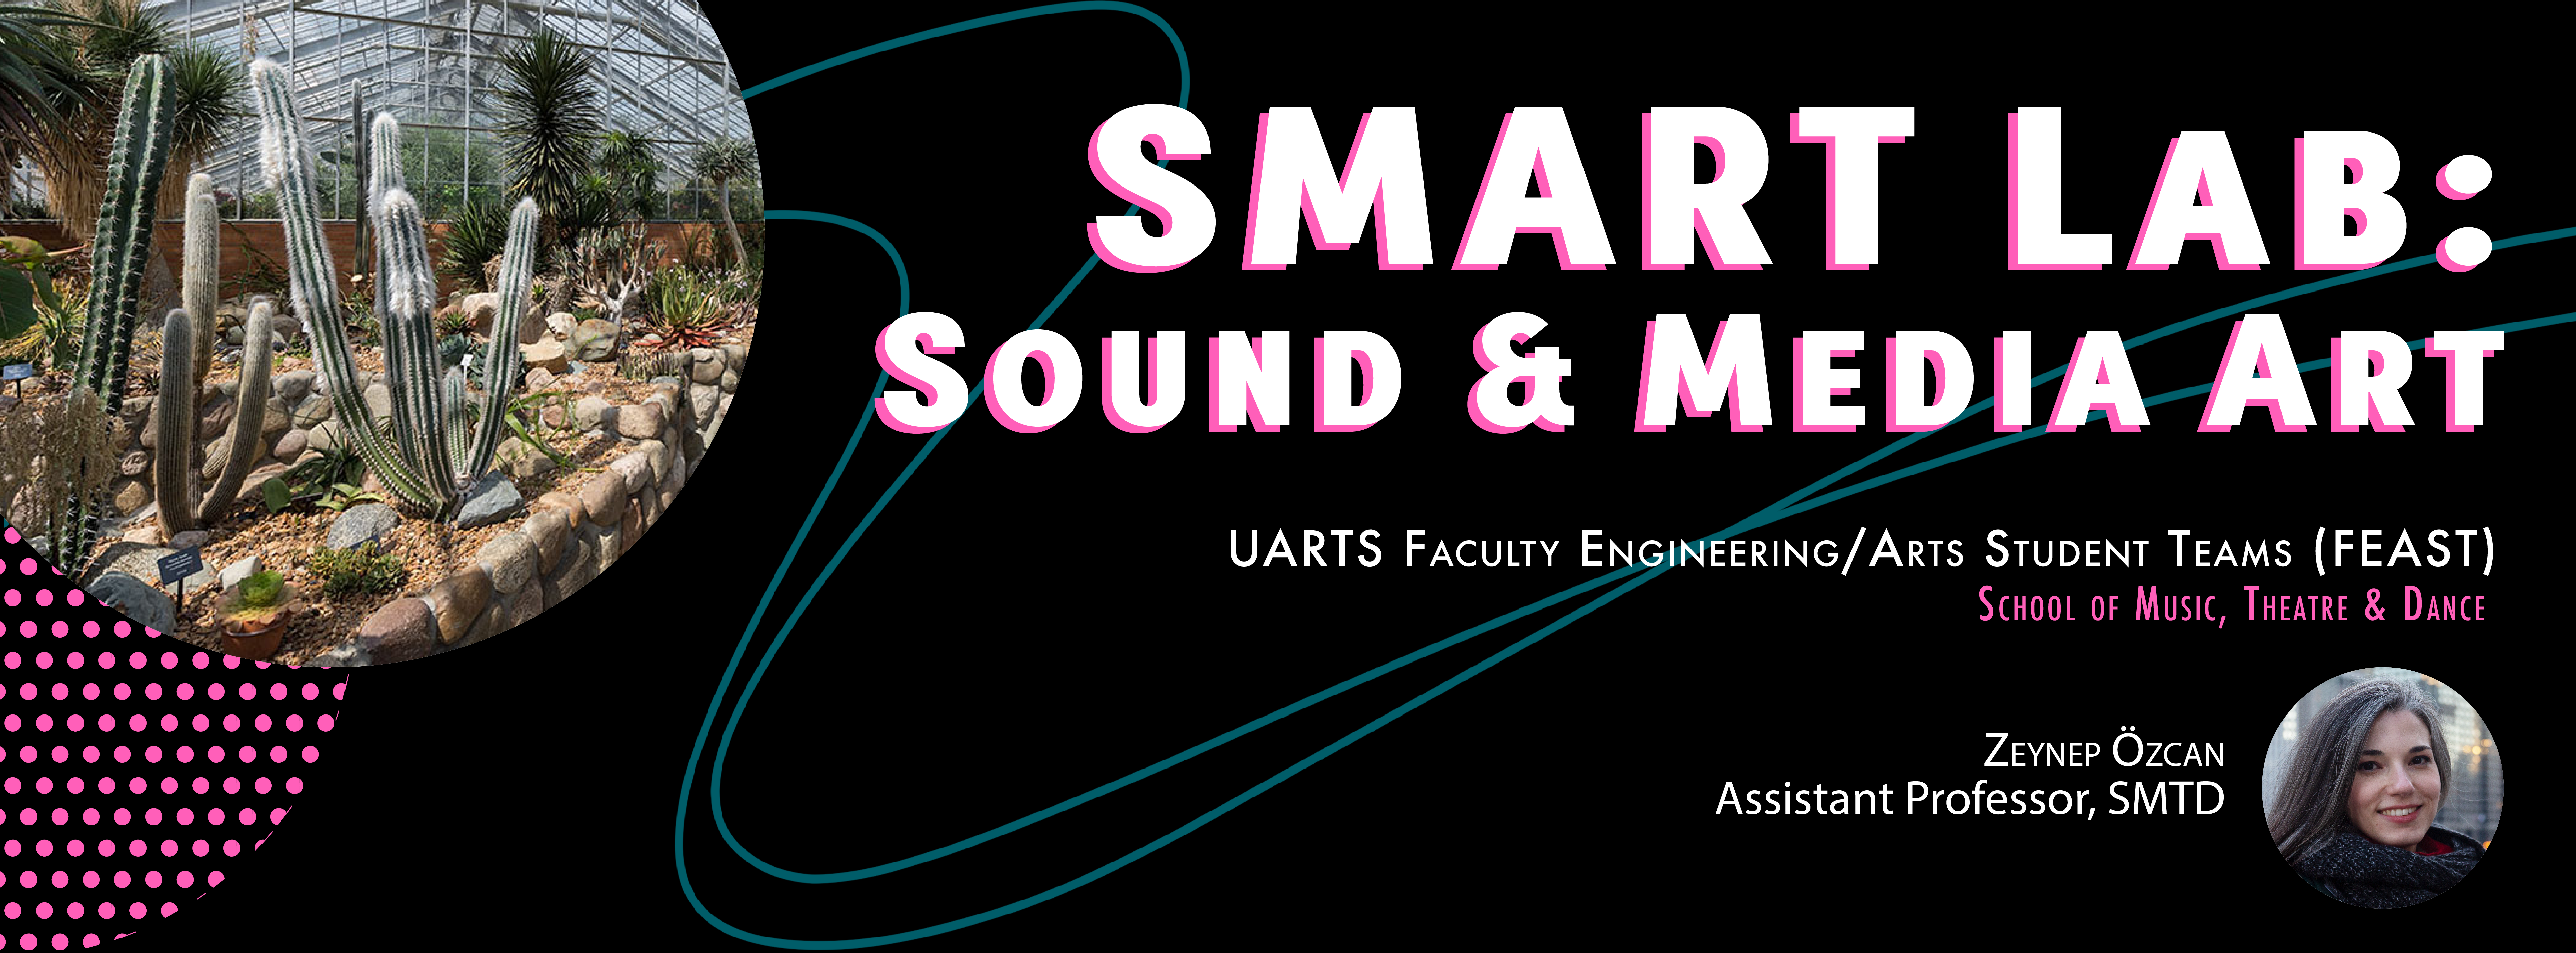 SMART Lab: Sound & Media Art